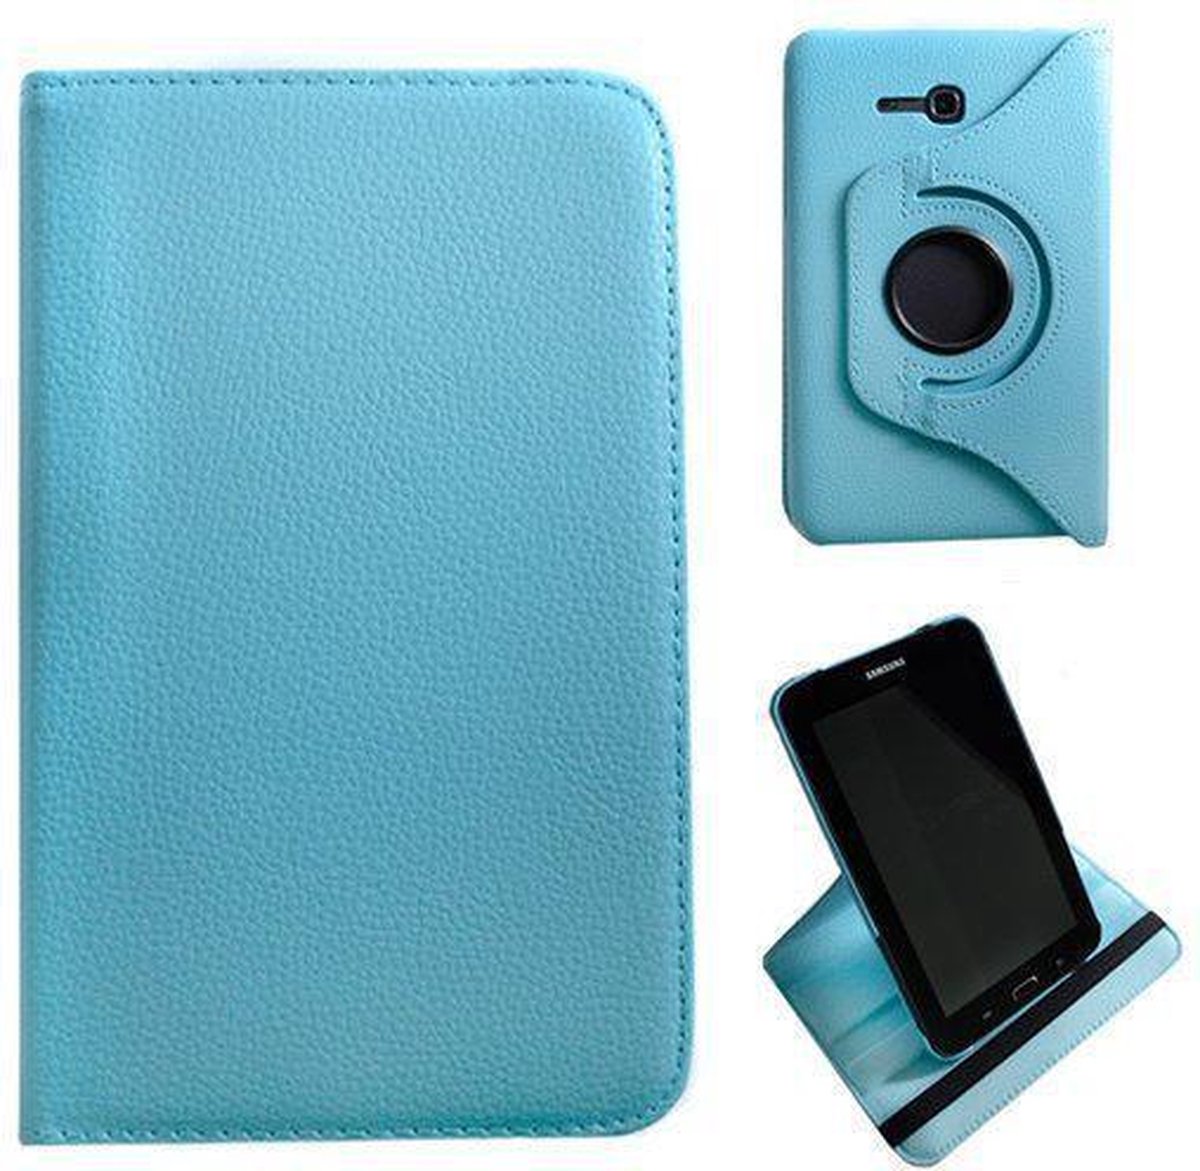 Samsung Galaxy Tab 3 T110 7 Inch Leather 360 Degree Rotating Case Licht Blauw Light Blue